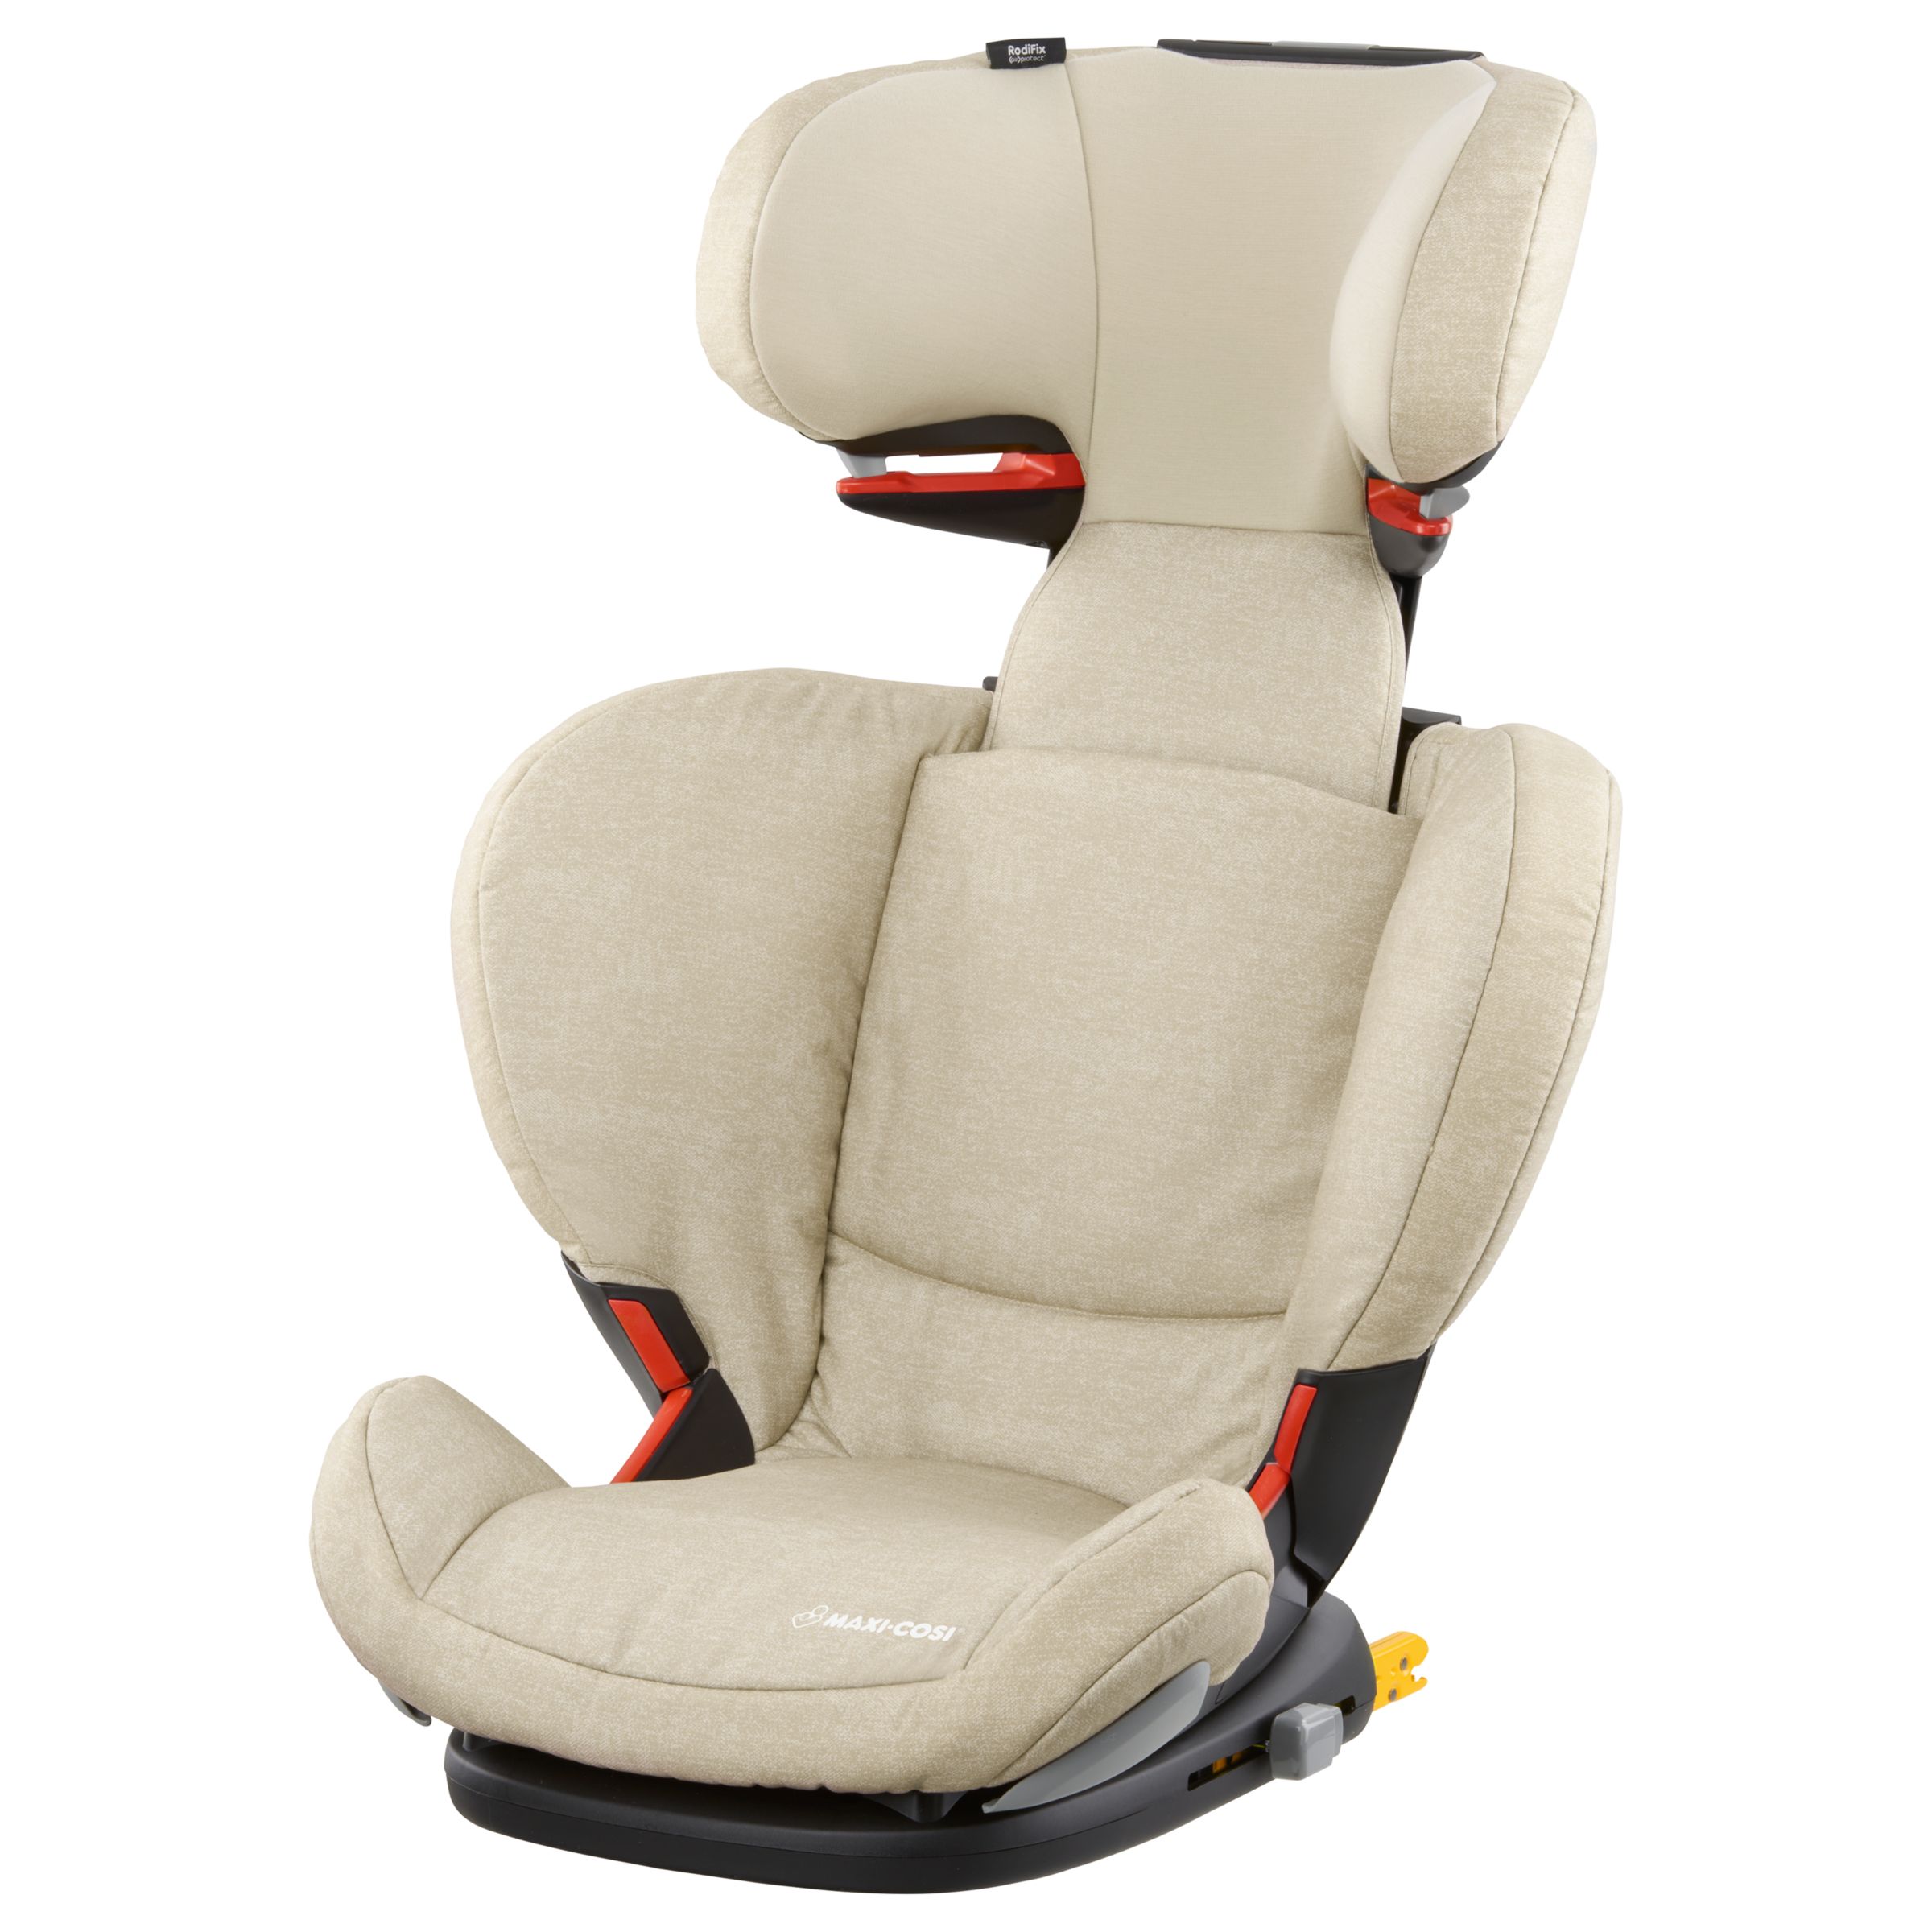 Maxi Cosi Rodifix Air Protect Group 2 3, Car Seats Uk Group 2 3